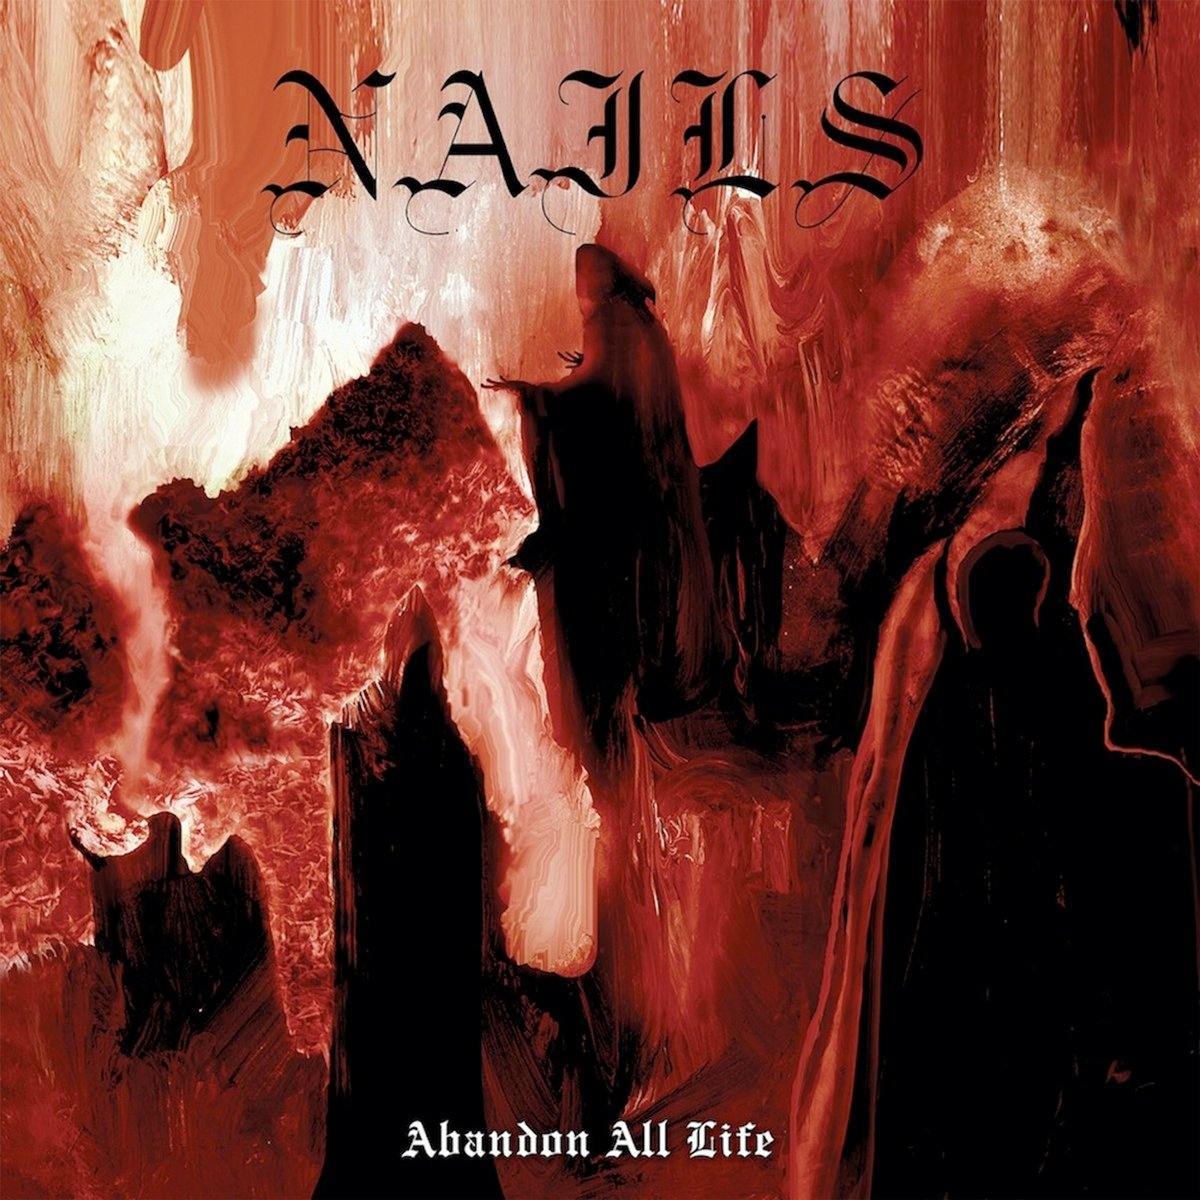 Buy – Nails "Abandon All Life" CD – Band & Music Merch – Cold Cuts Merch